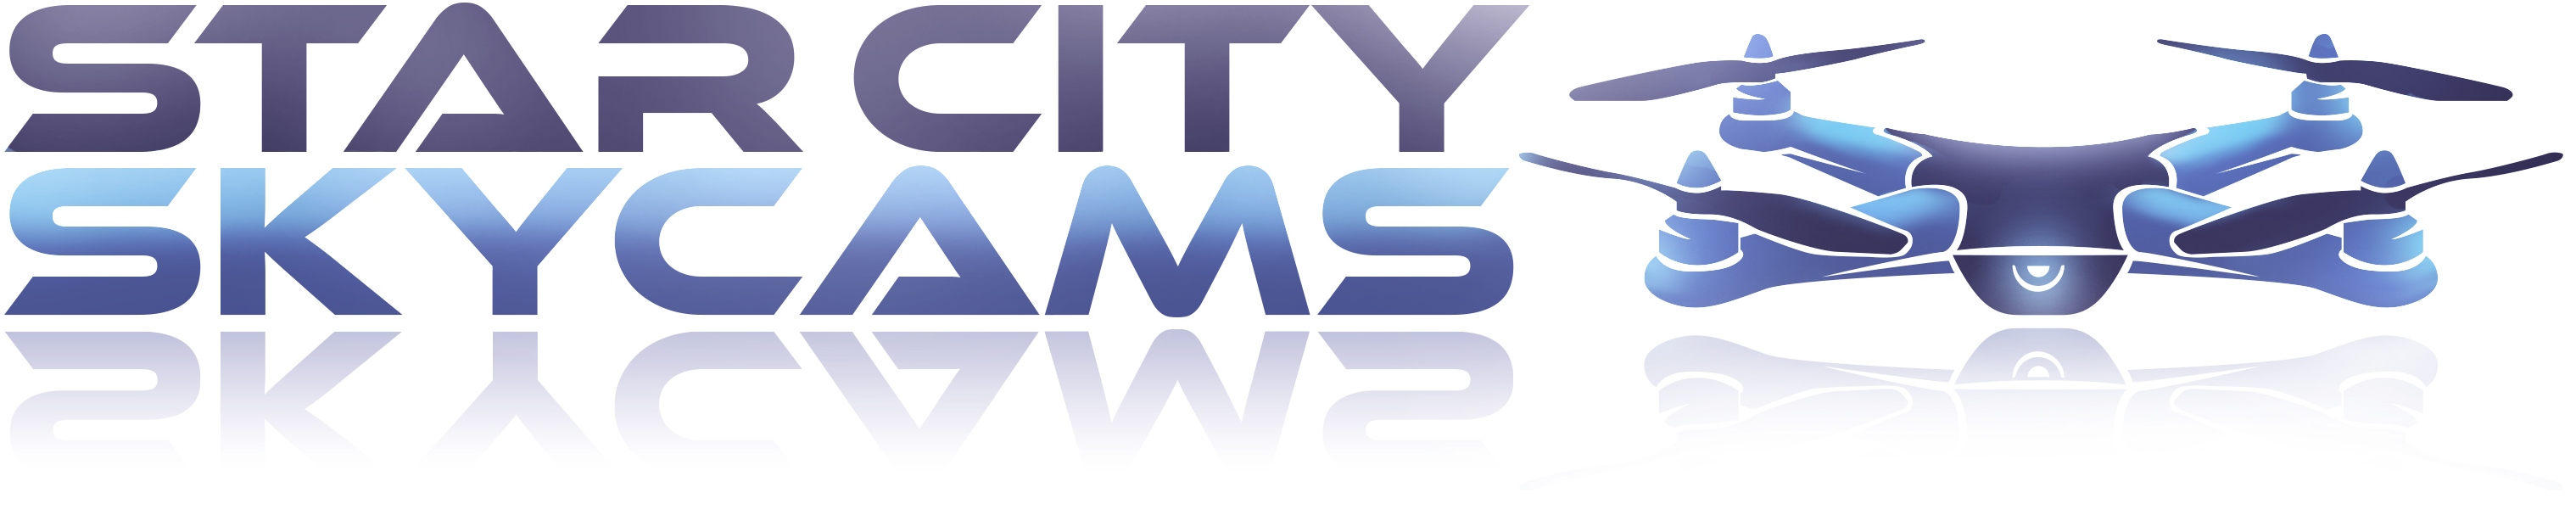 Star City SkyCams - Website